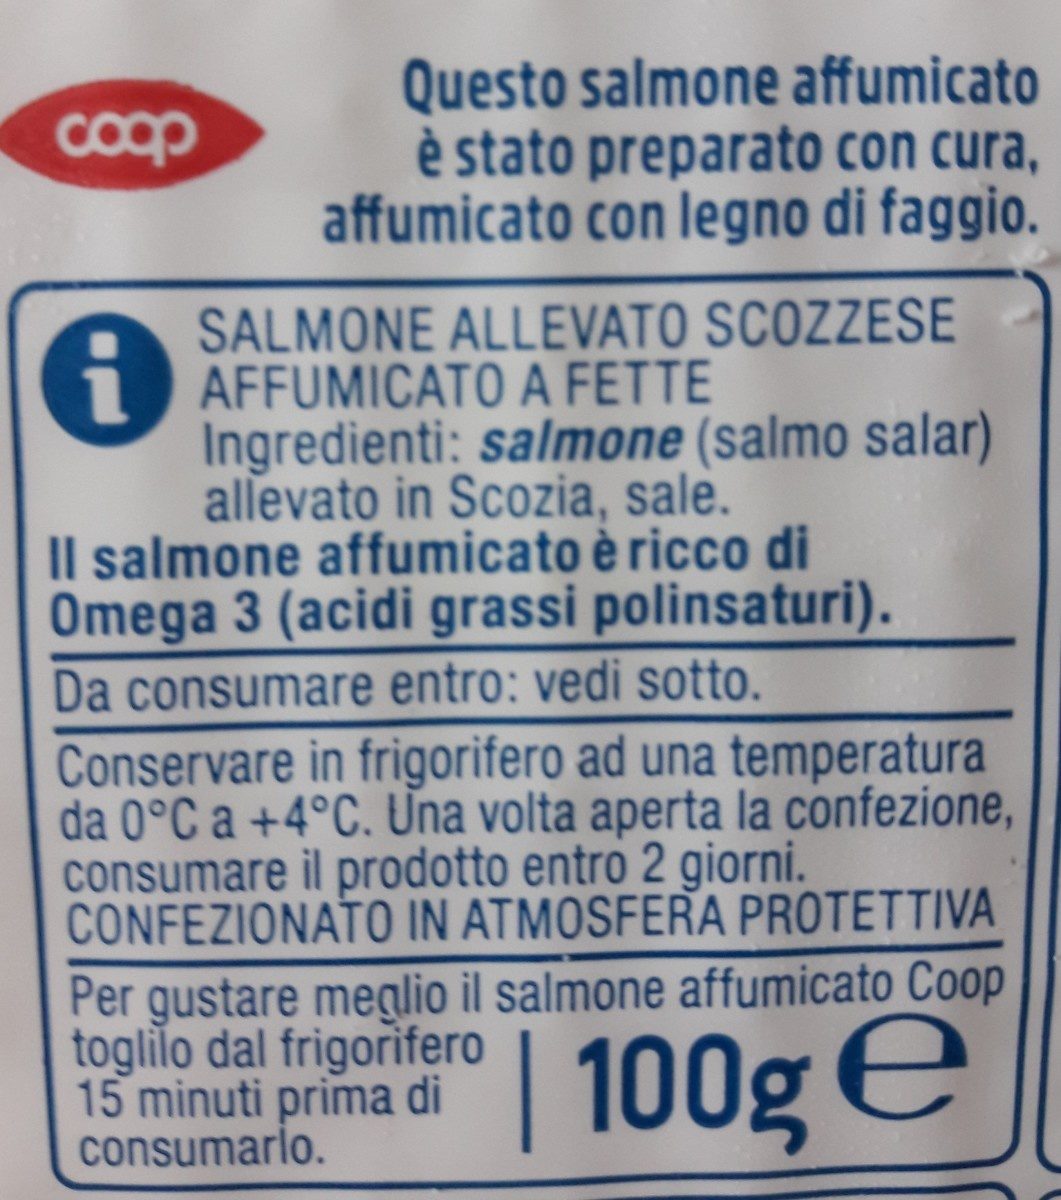 Salmone scozzese affumicato - Ingredients - it